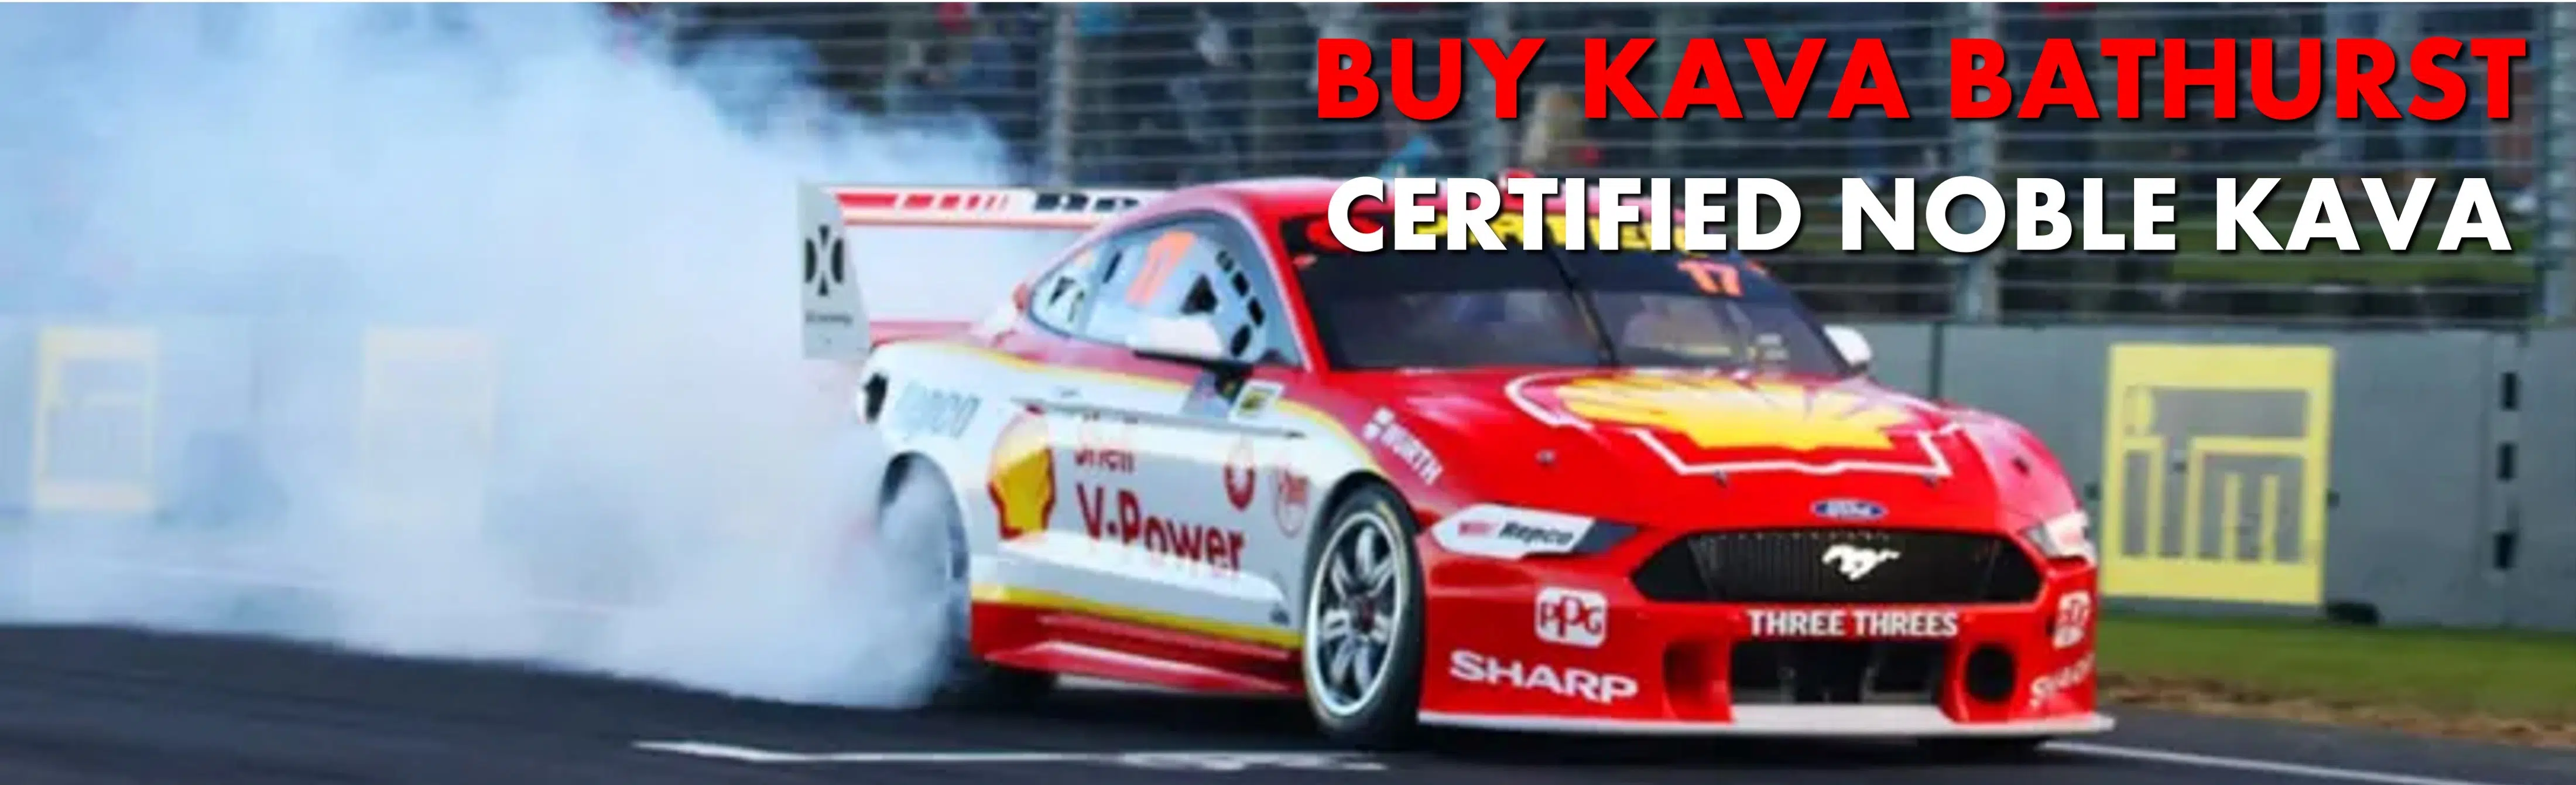 Racing Car in Bathurst 1000 with caption Buy Kava Bathurst Certified Noble Kava